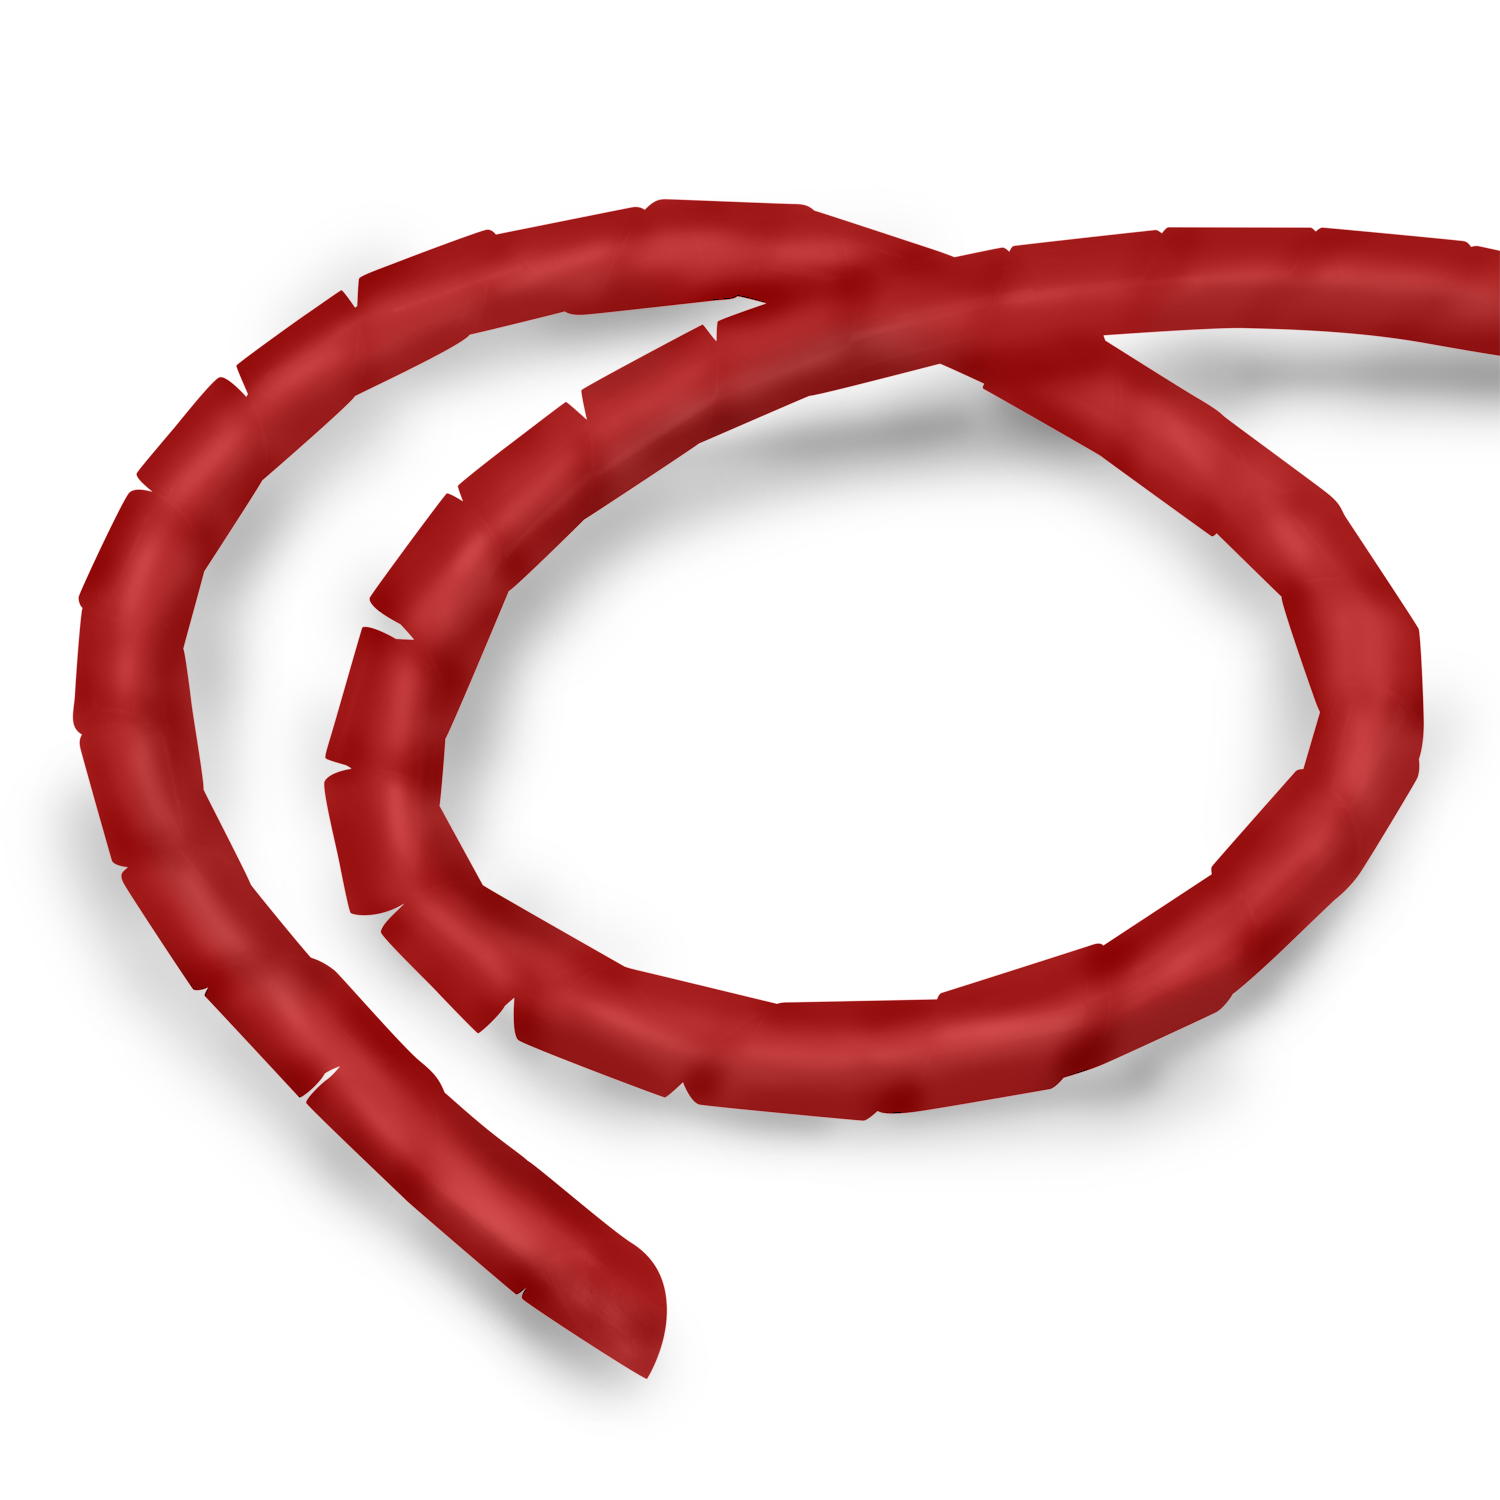 TPFNET 3er Pack Premium Kabelschlauch, 10m Rot Spiral-Kabelschlauch Rot, 4-50mm